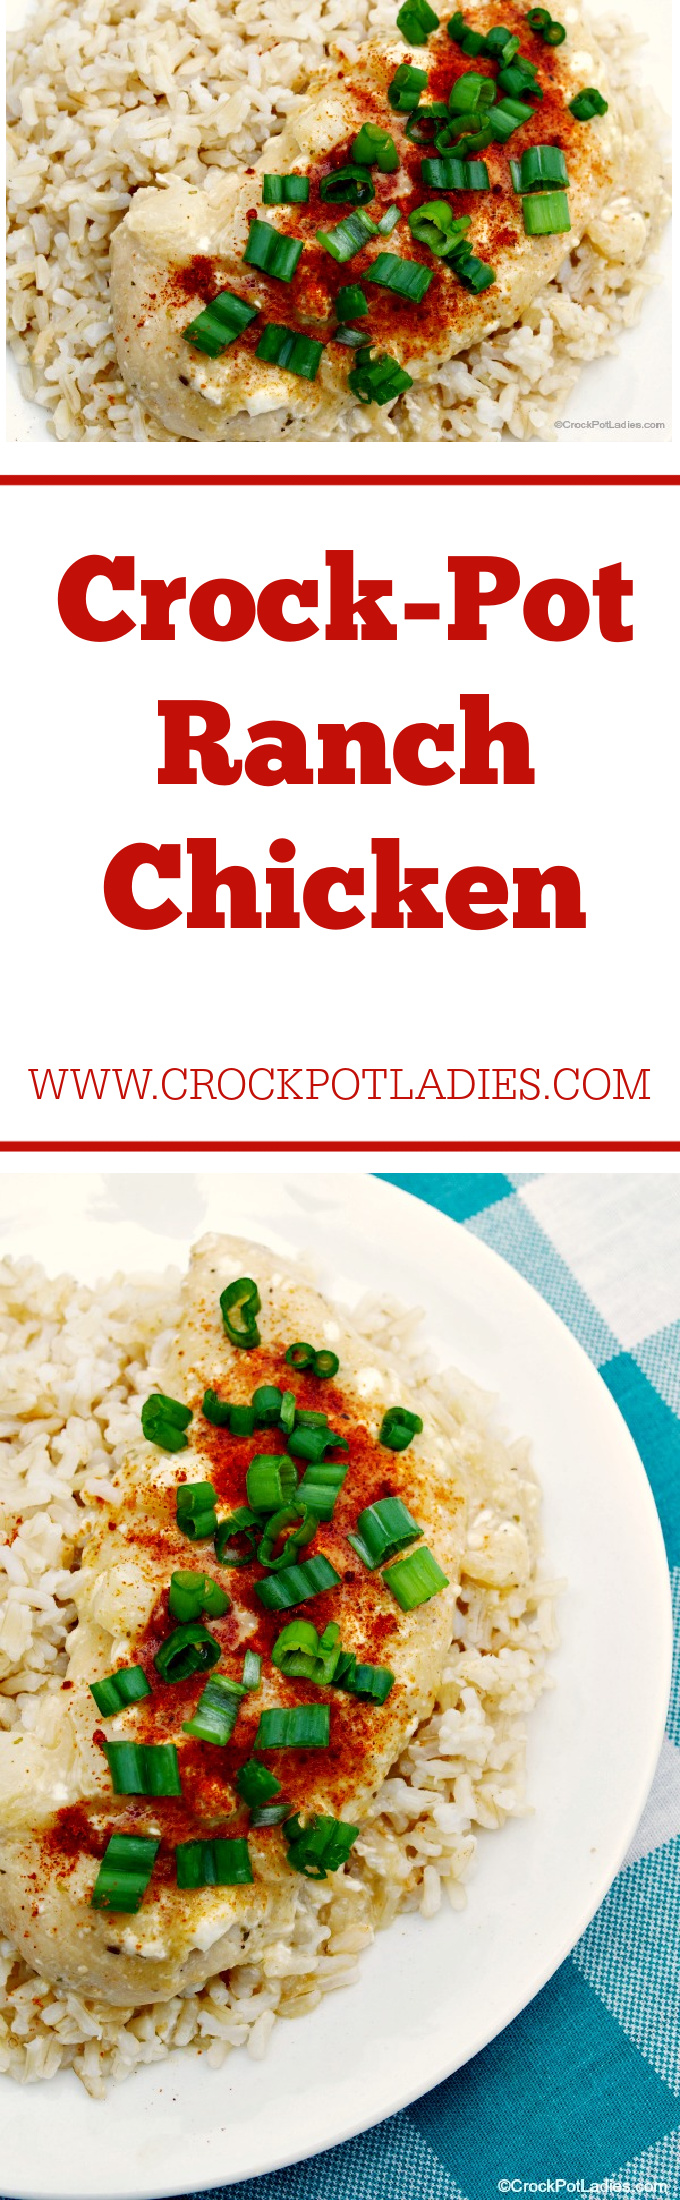 Crock-Pot Ranch Chicken